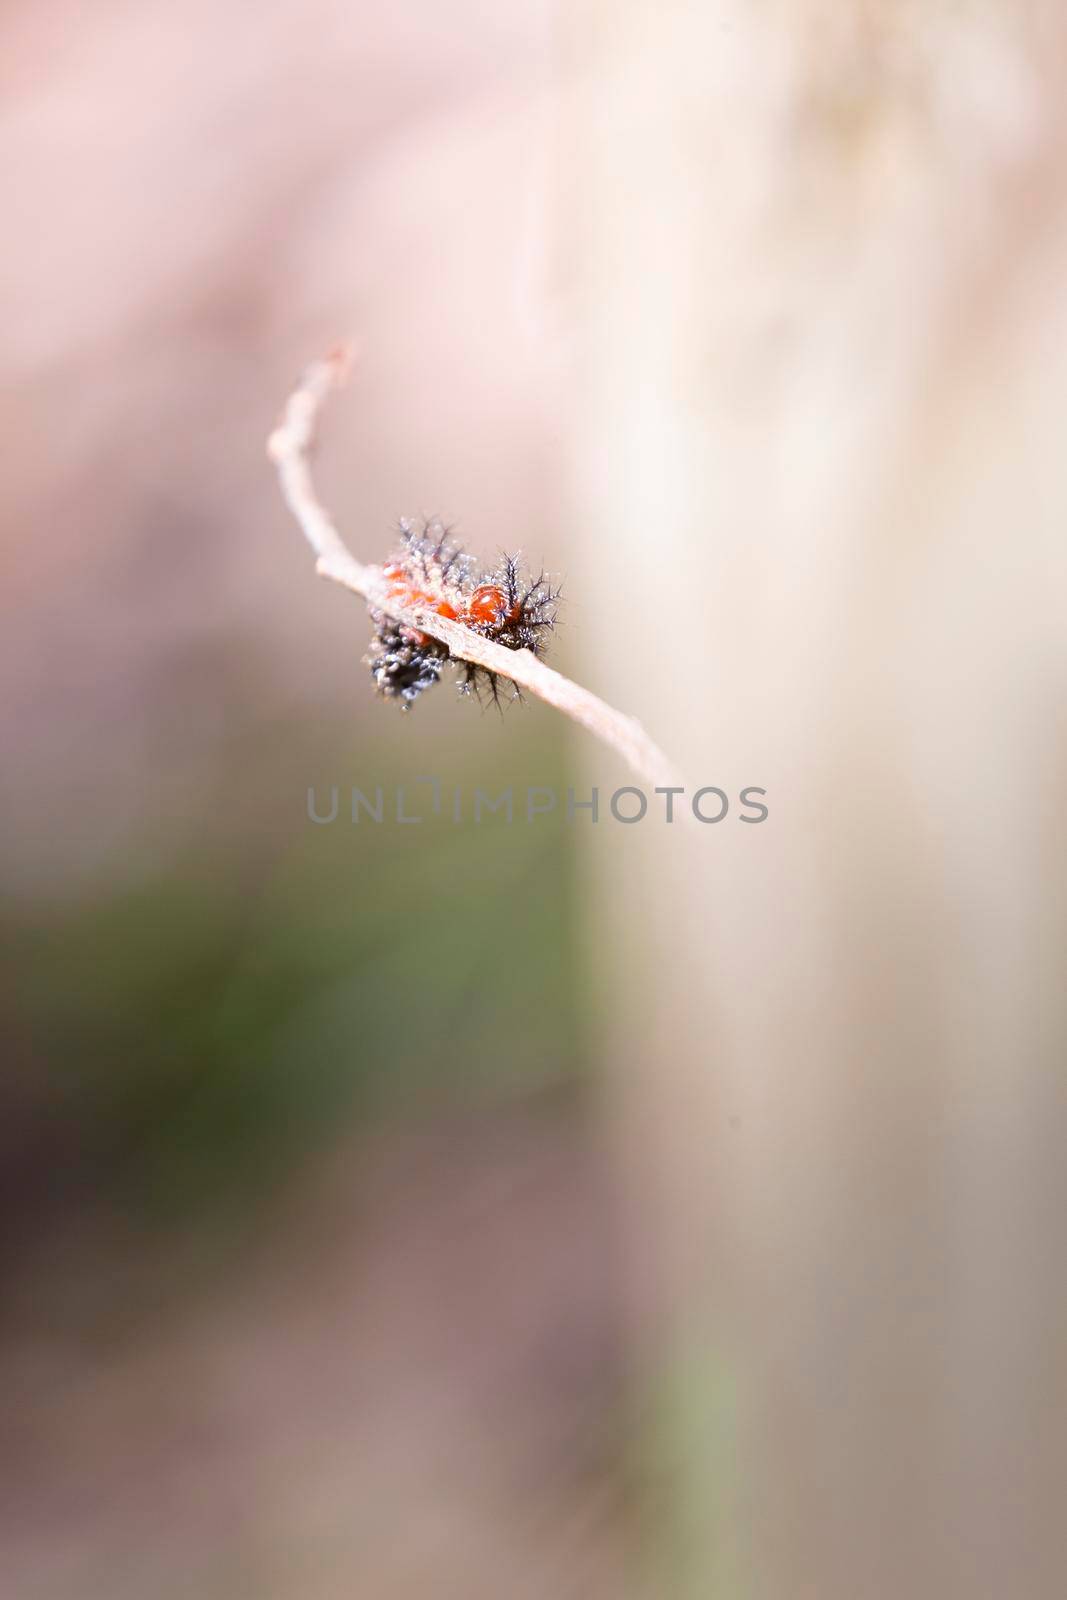 Buck moth caterpillar (Hemileuca maia) perched on a tiny twig